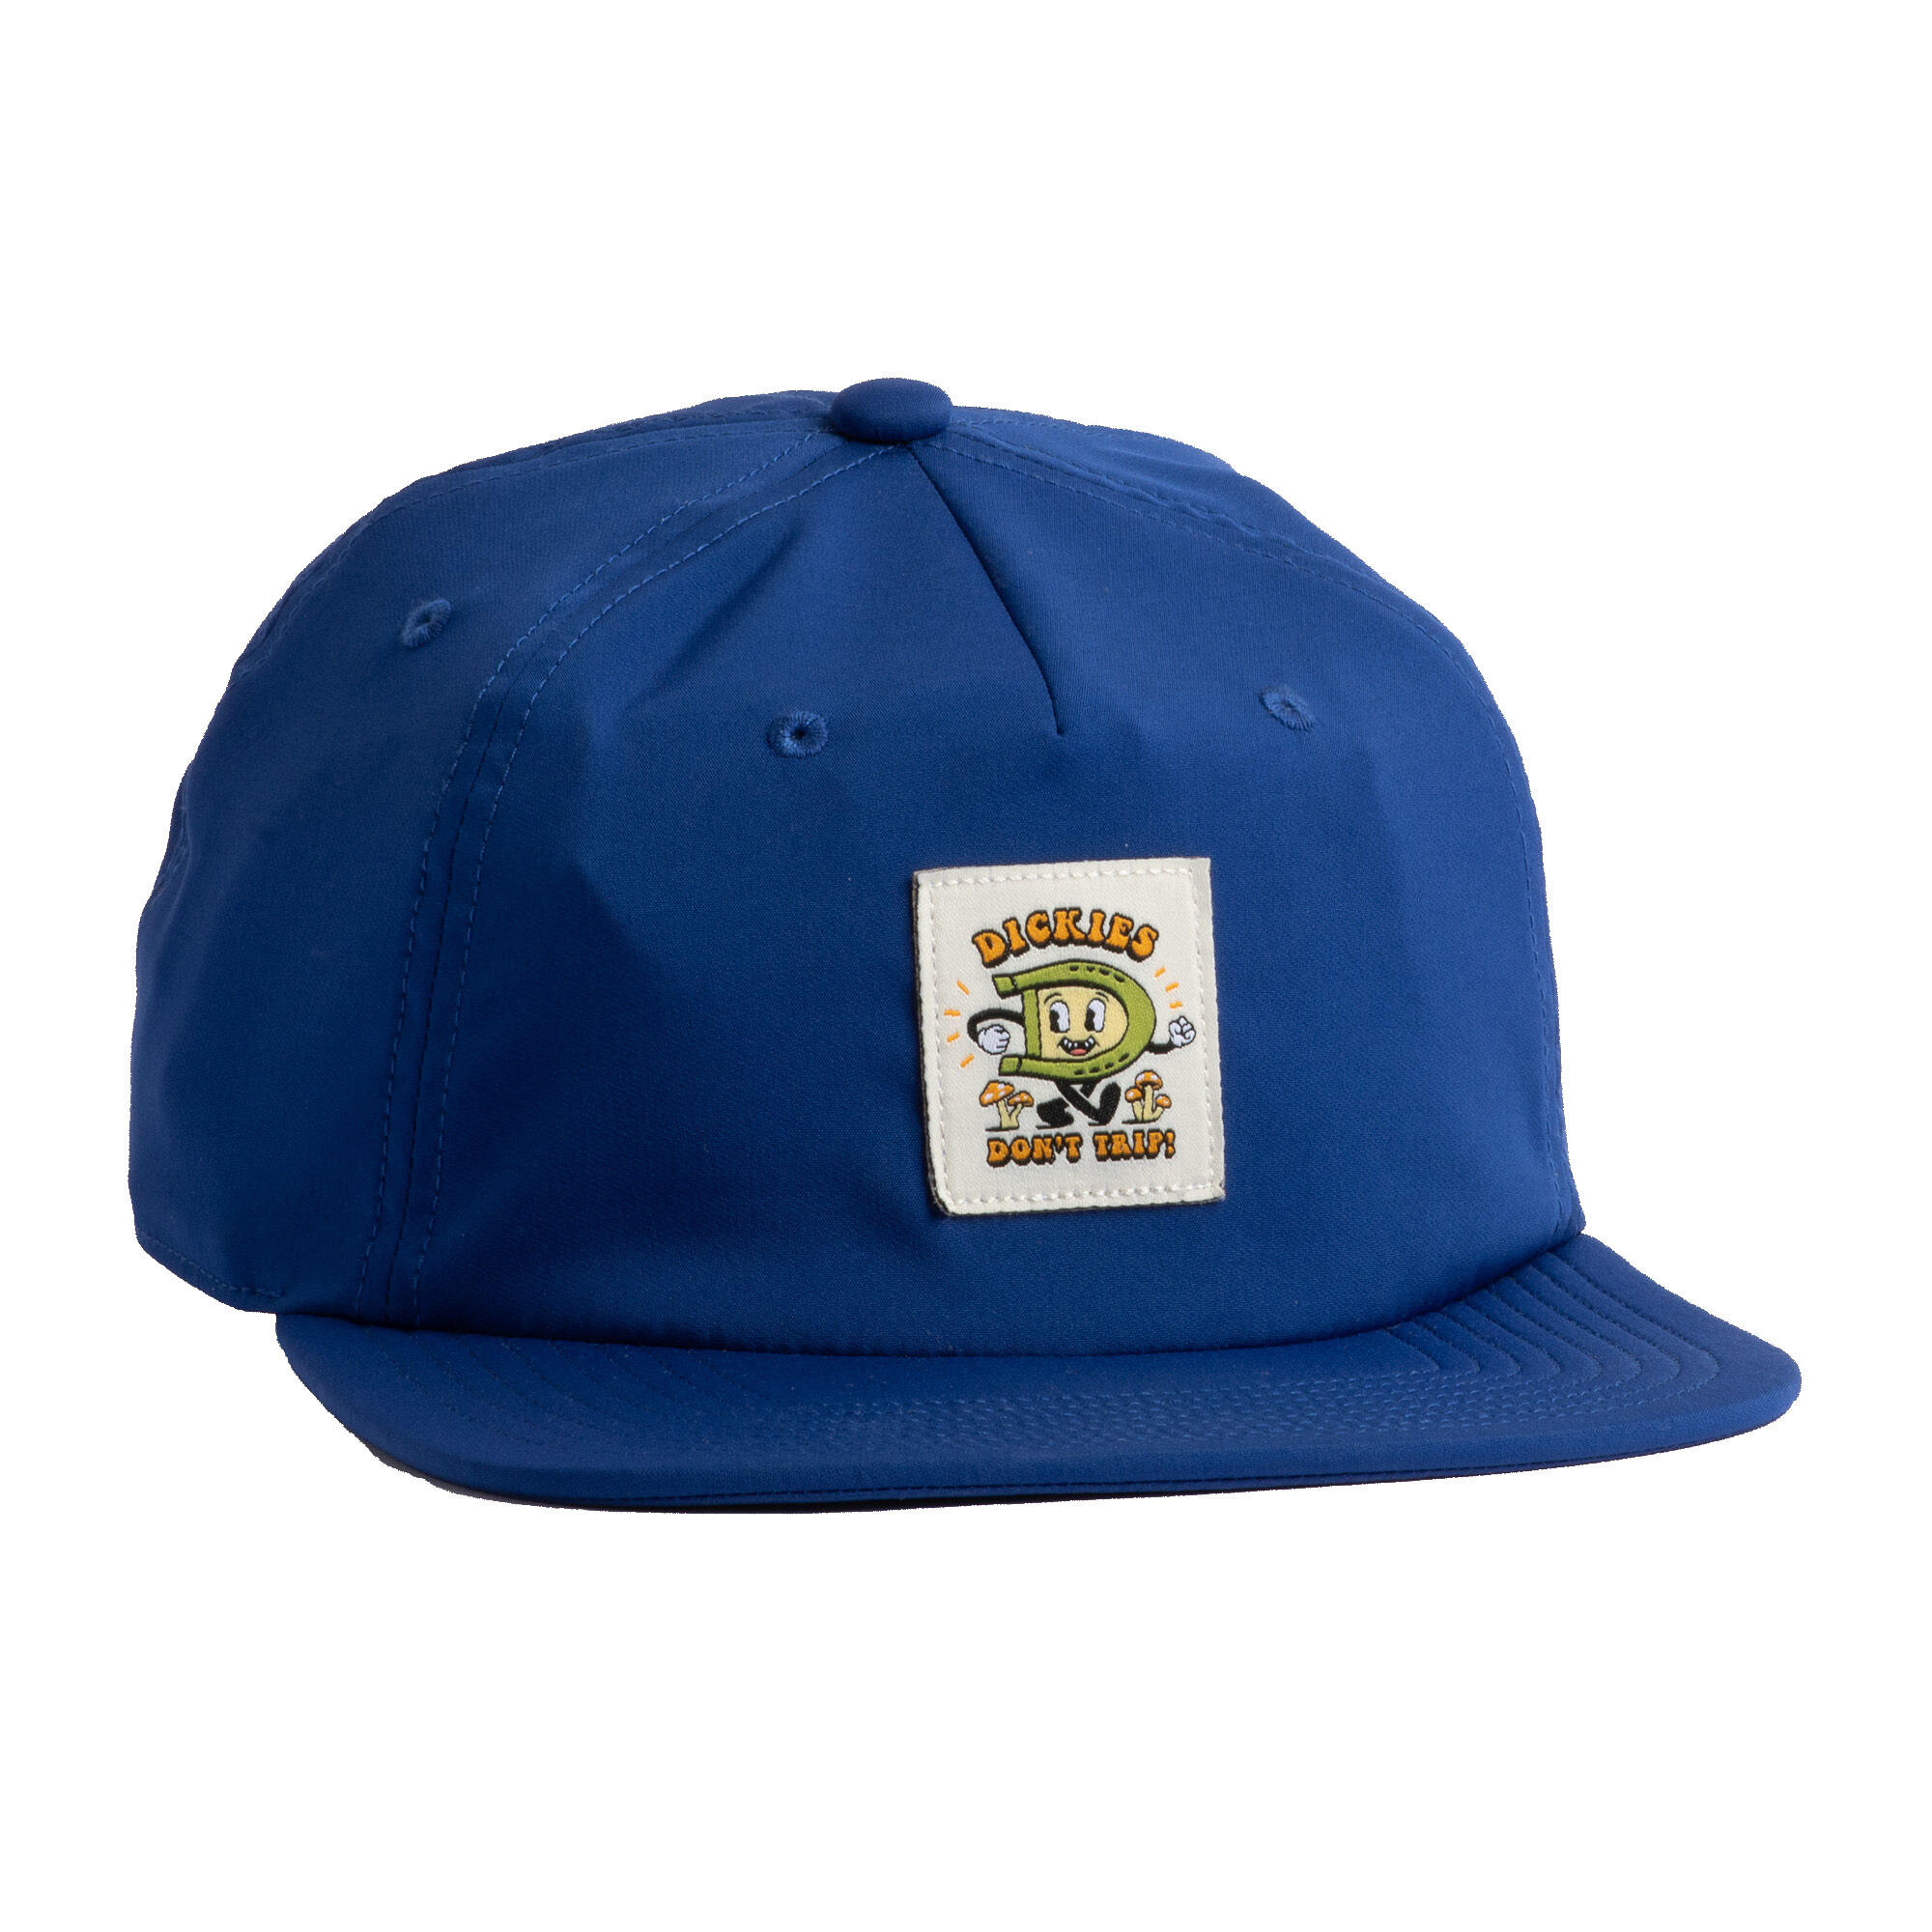 Dickies Dickies Dont Low Blue Trip Escapist Hat Profile - Cobalt